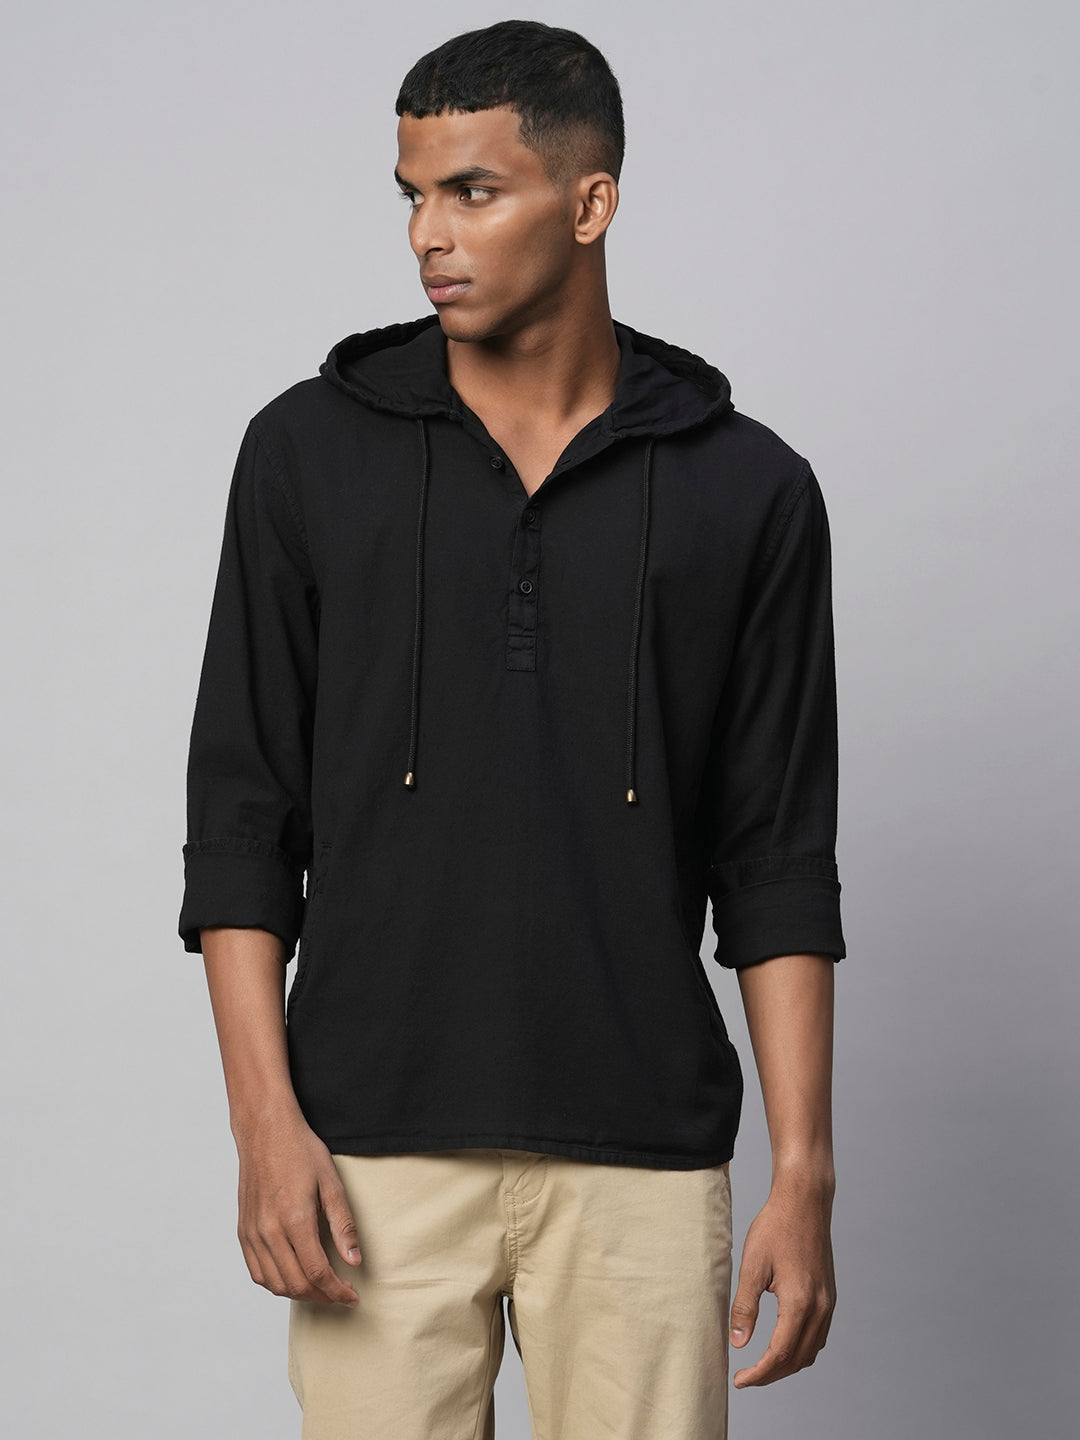 Men's Black Hoodie Cotton Linen Long Sleeved Shirt